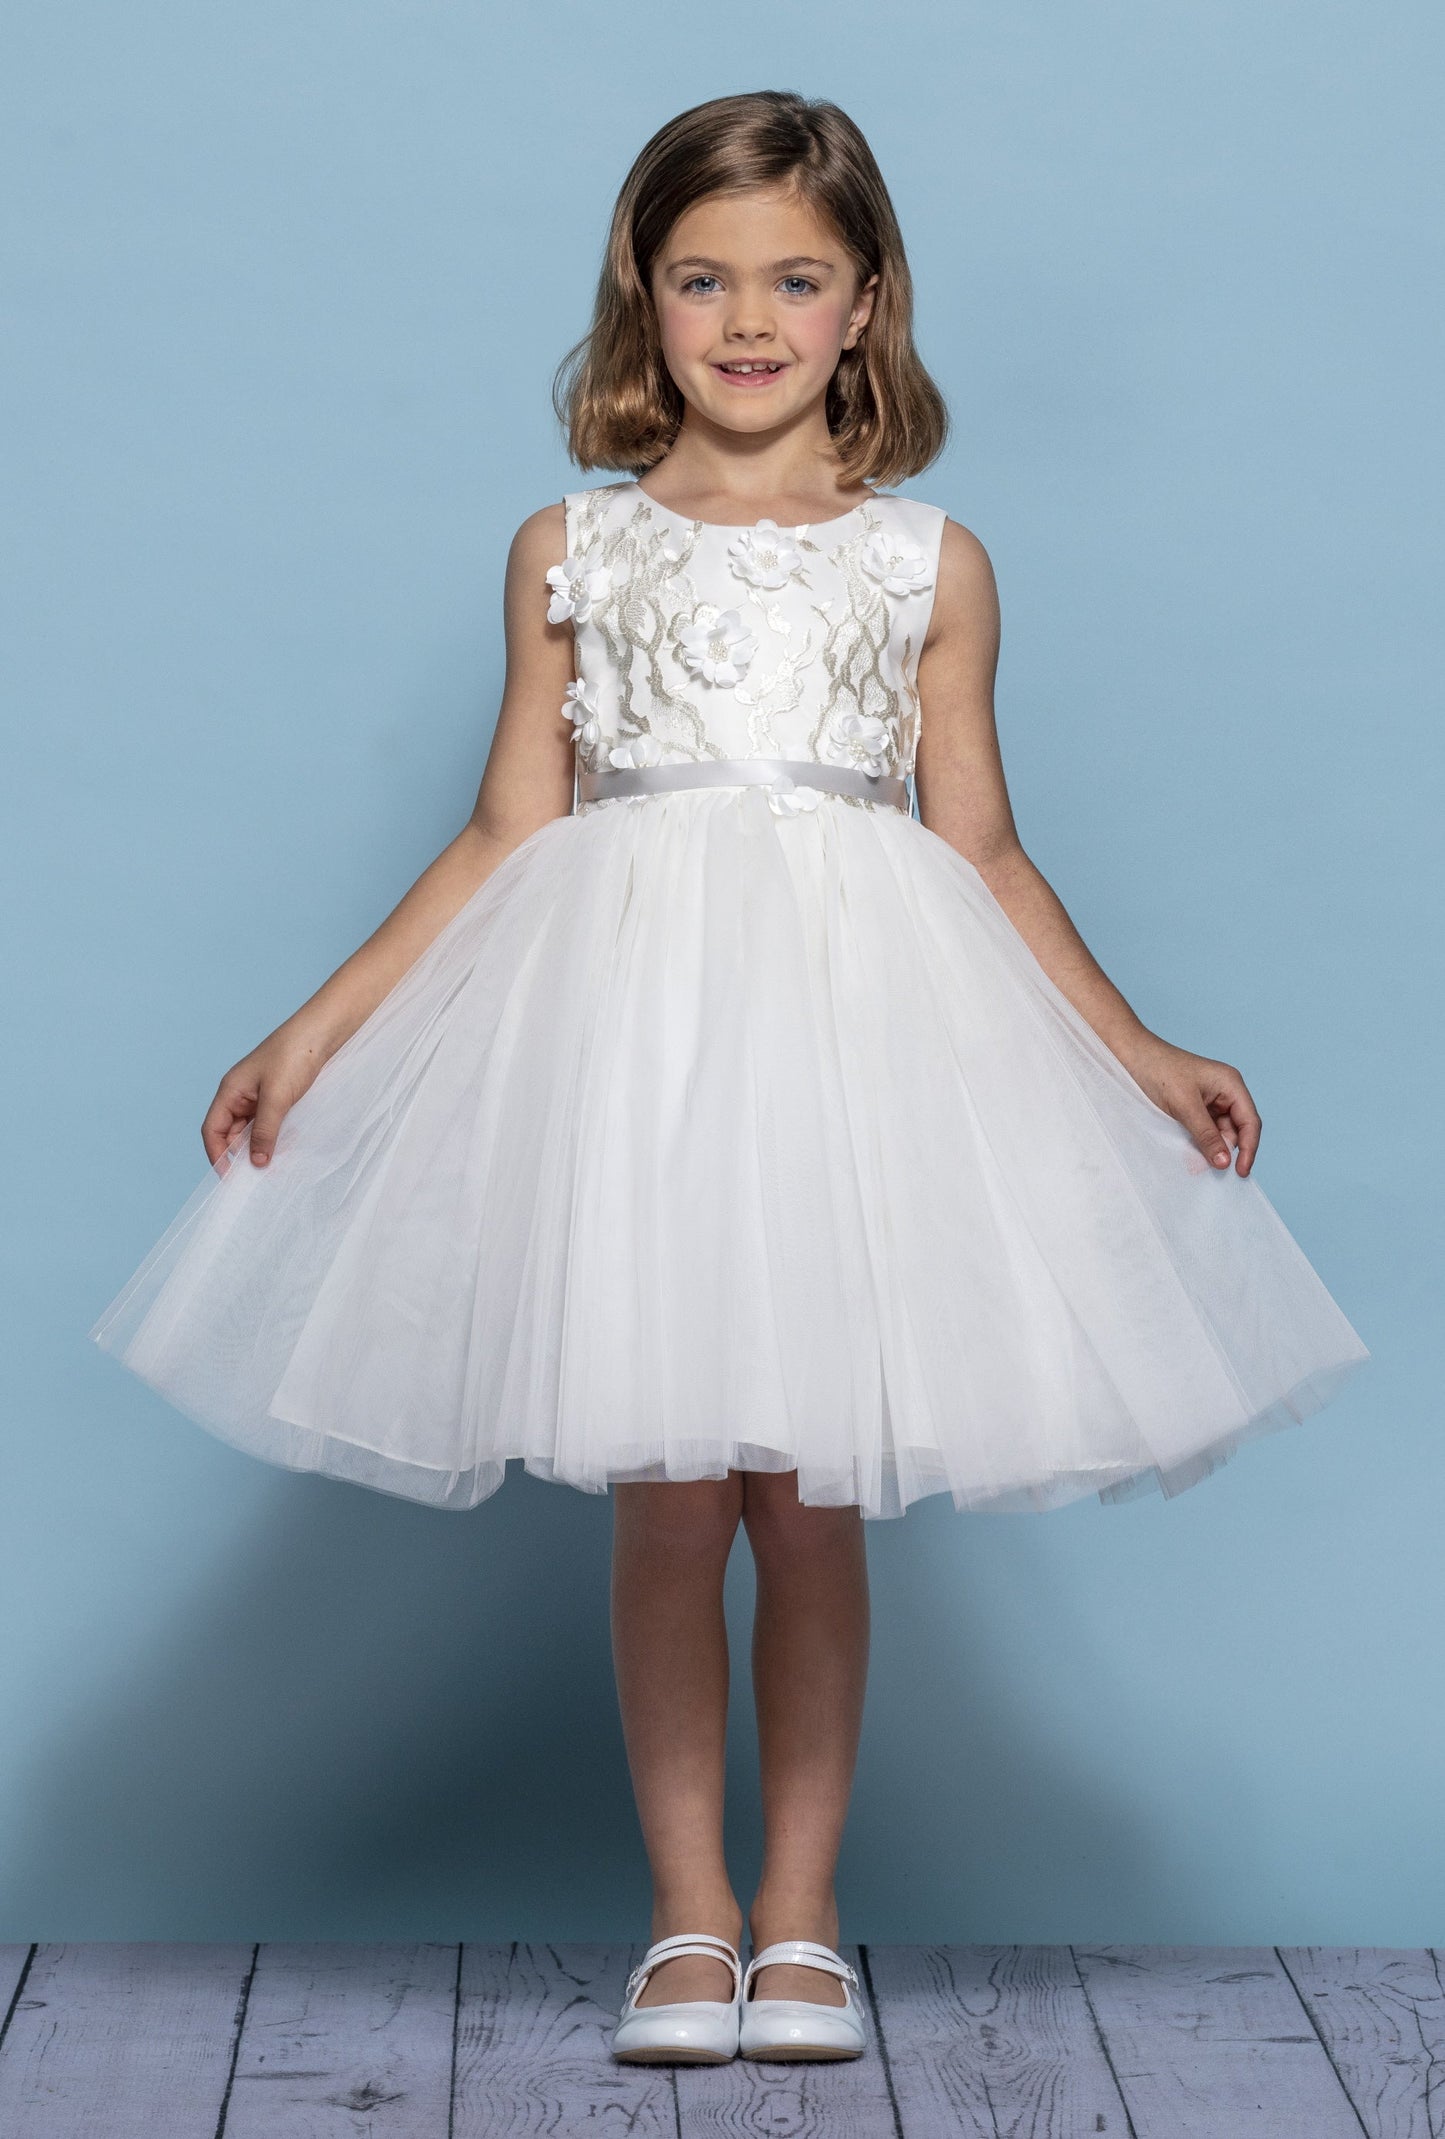 Rosebuds 5135 Size 2 White Short Flared Flower Girl Dress Tulle Party Formal Gown